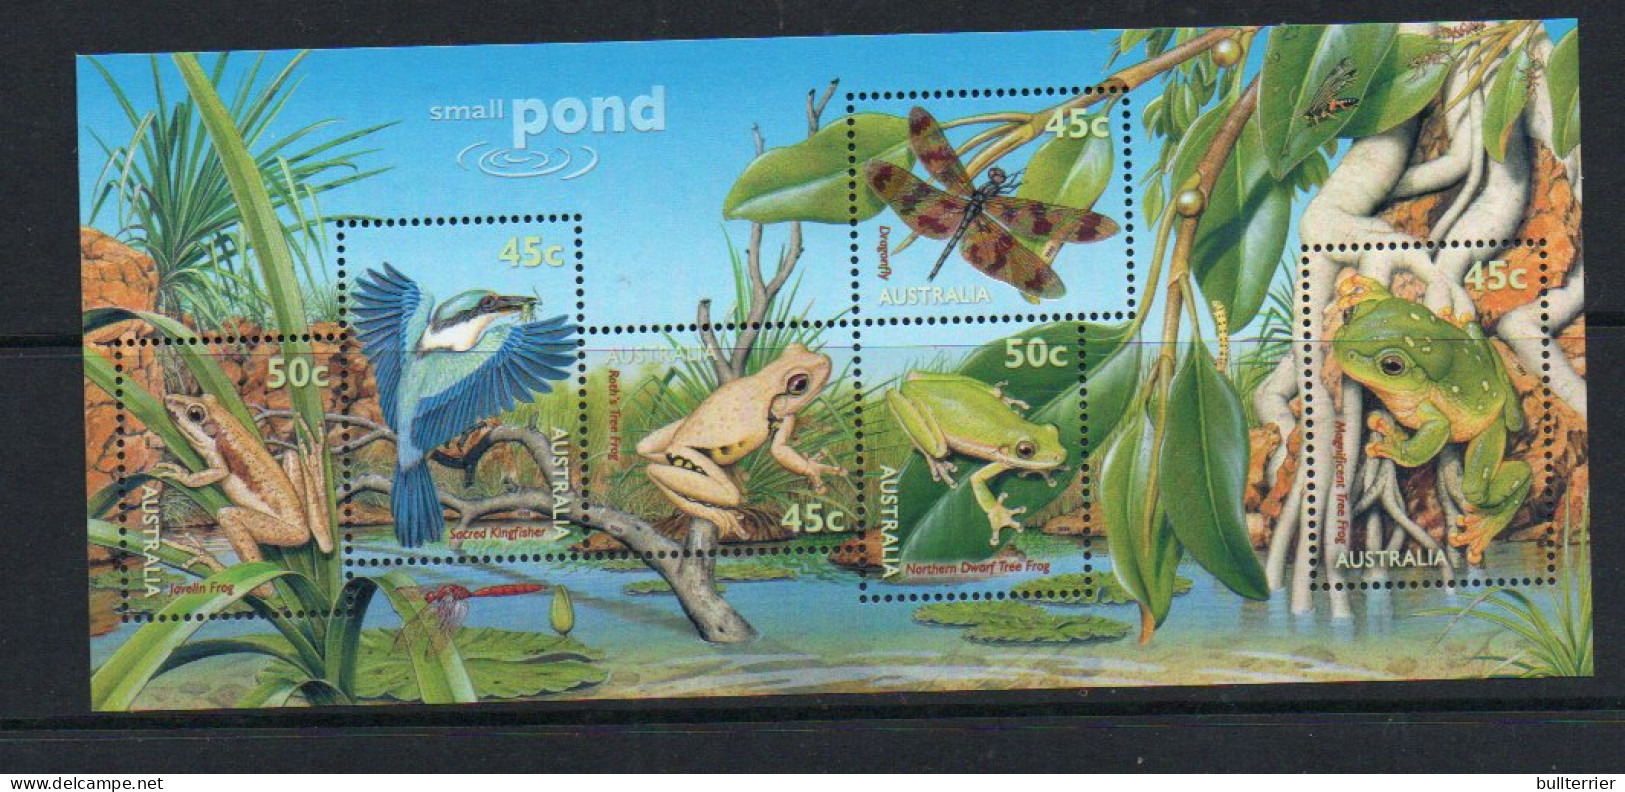 REPTILES & AMPHIBIANS - AUSTRALIA -POND LIFE  SOUVENIR SHEET  MINT NEVER HINGED - Frogs